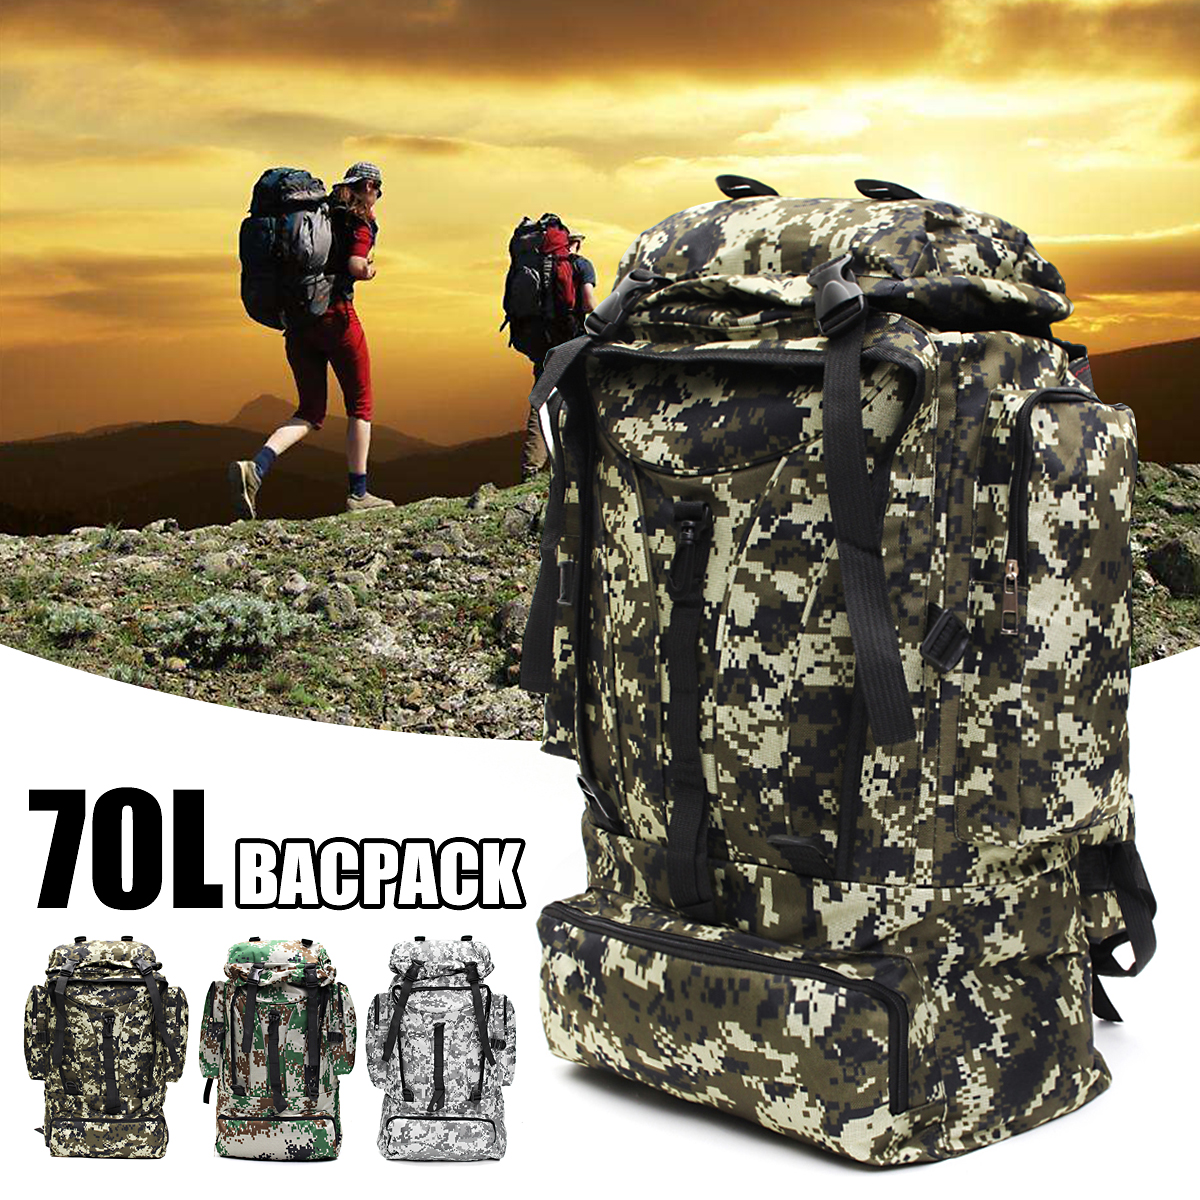 70L-Large-Capacity-Camouflage-Outdoor-Camping-Hiking-Travel-Waterproof-Macbook-Tablet-Storage-Bag-Ba-1856151-1